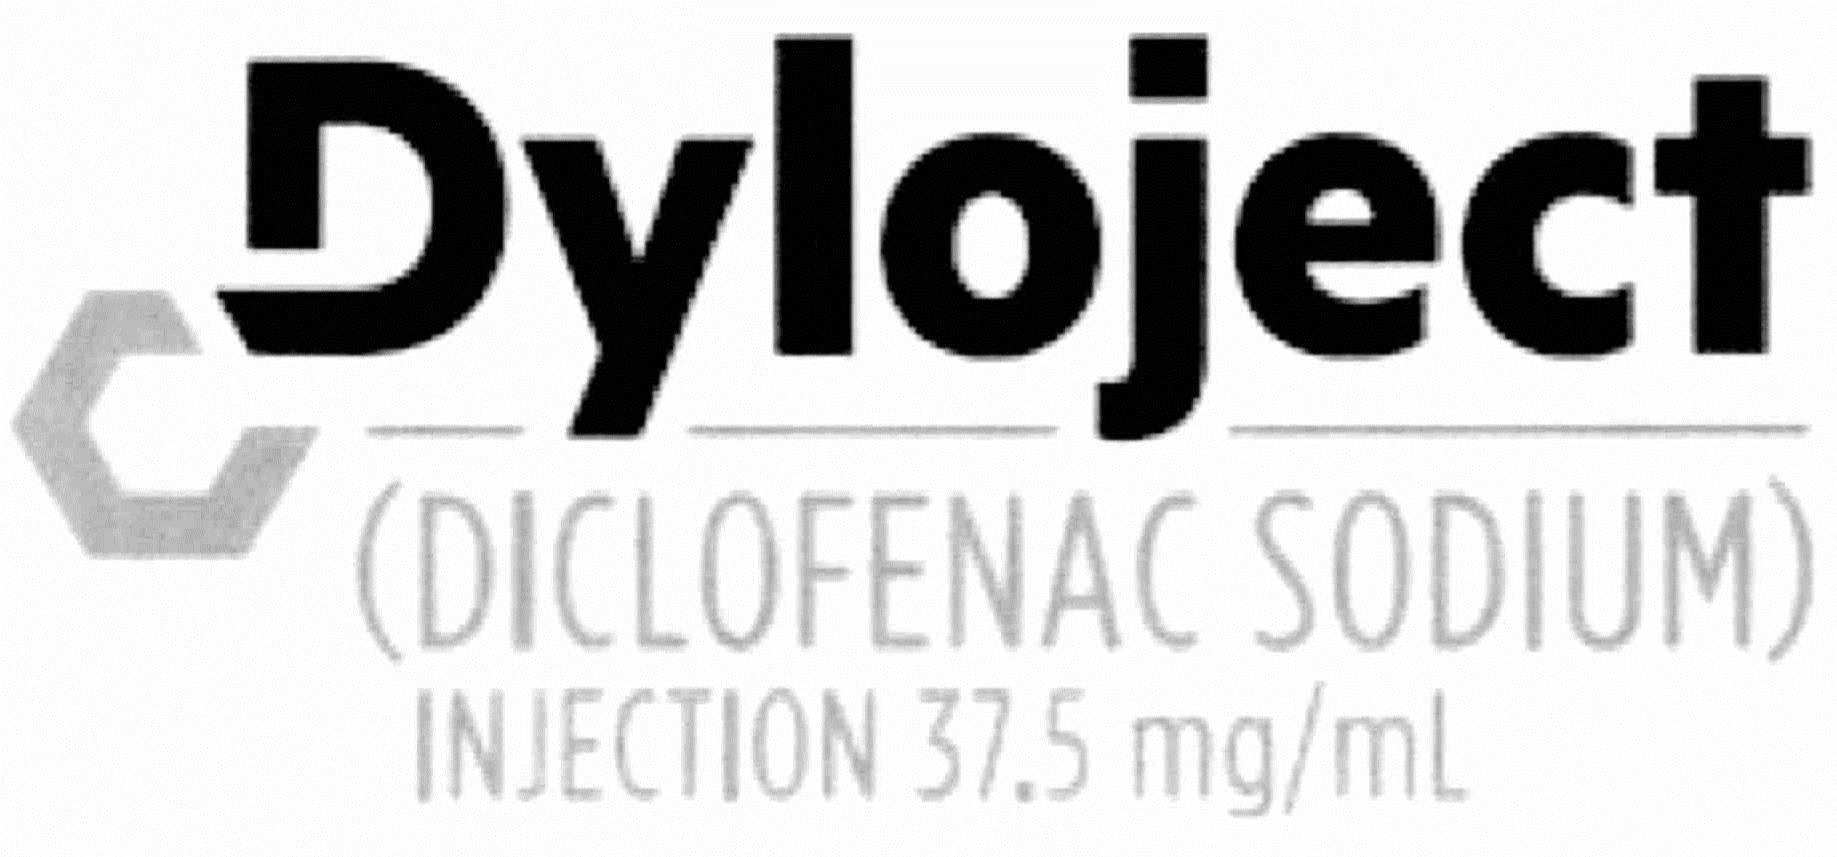  DYLOJECT (DICLOFENAC SODIUM) INJECTION 37.5 MG/ML